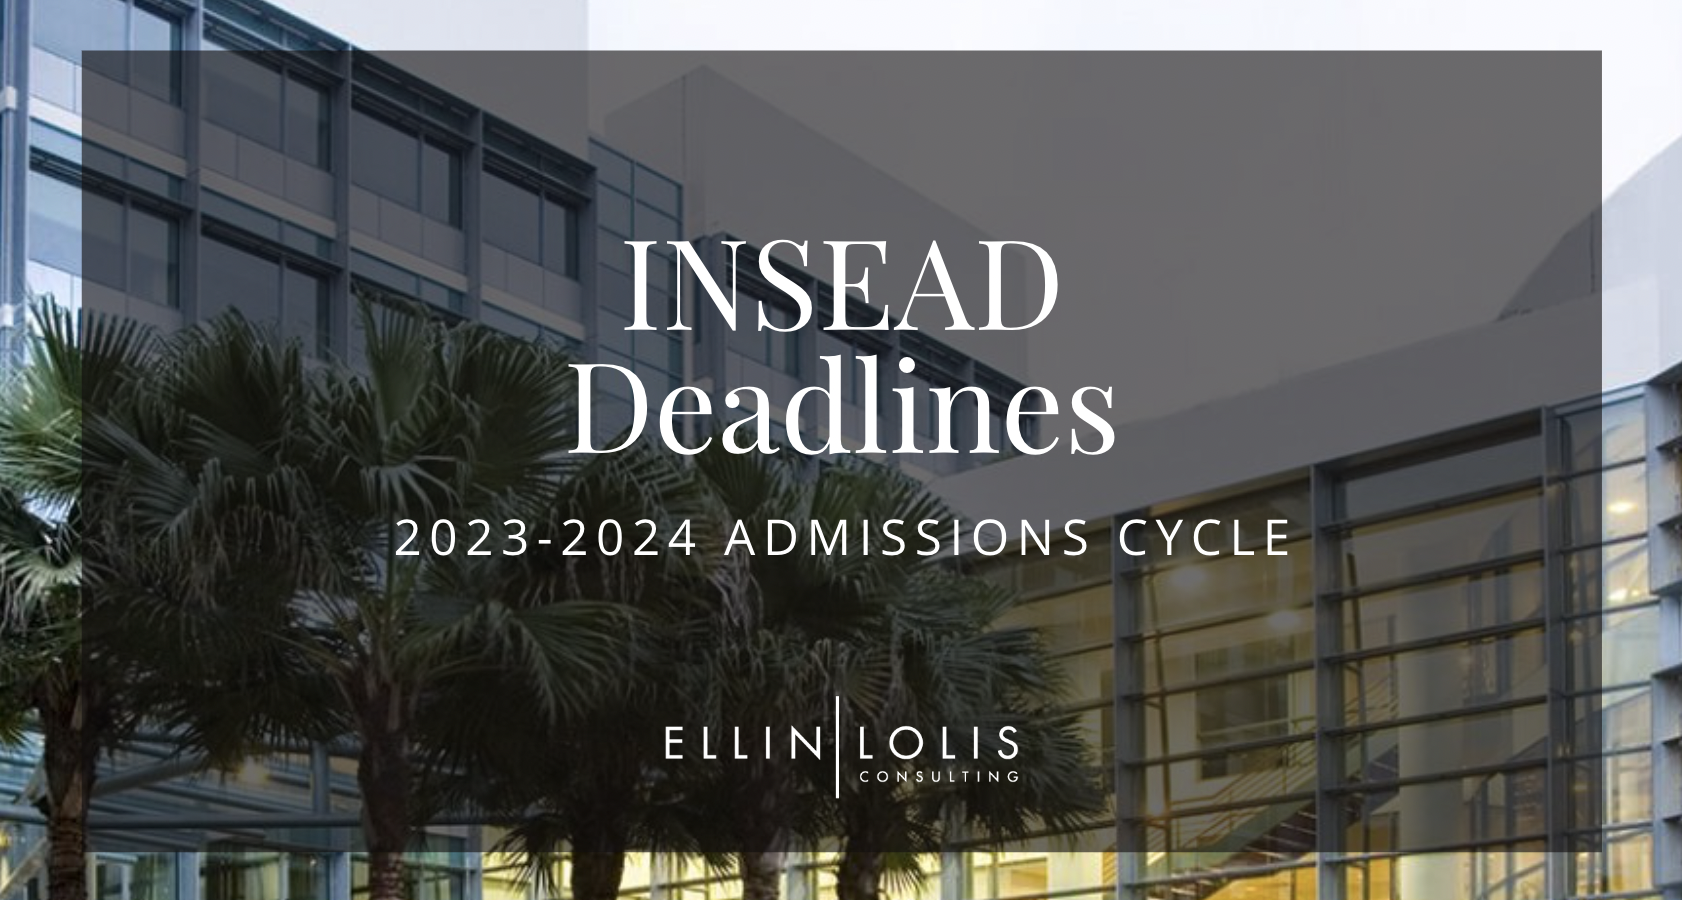 INSEAD MBA Deadlines for 2023-2024